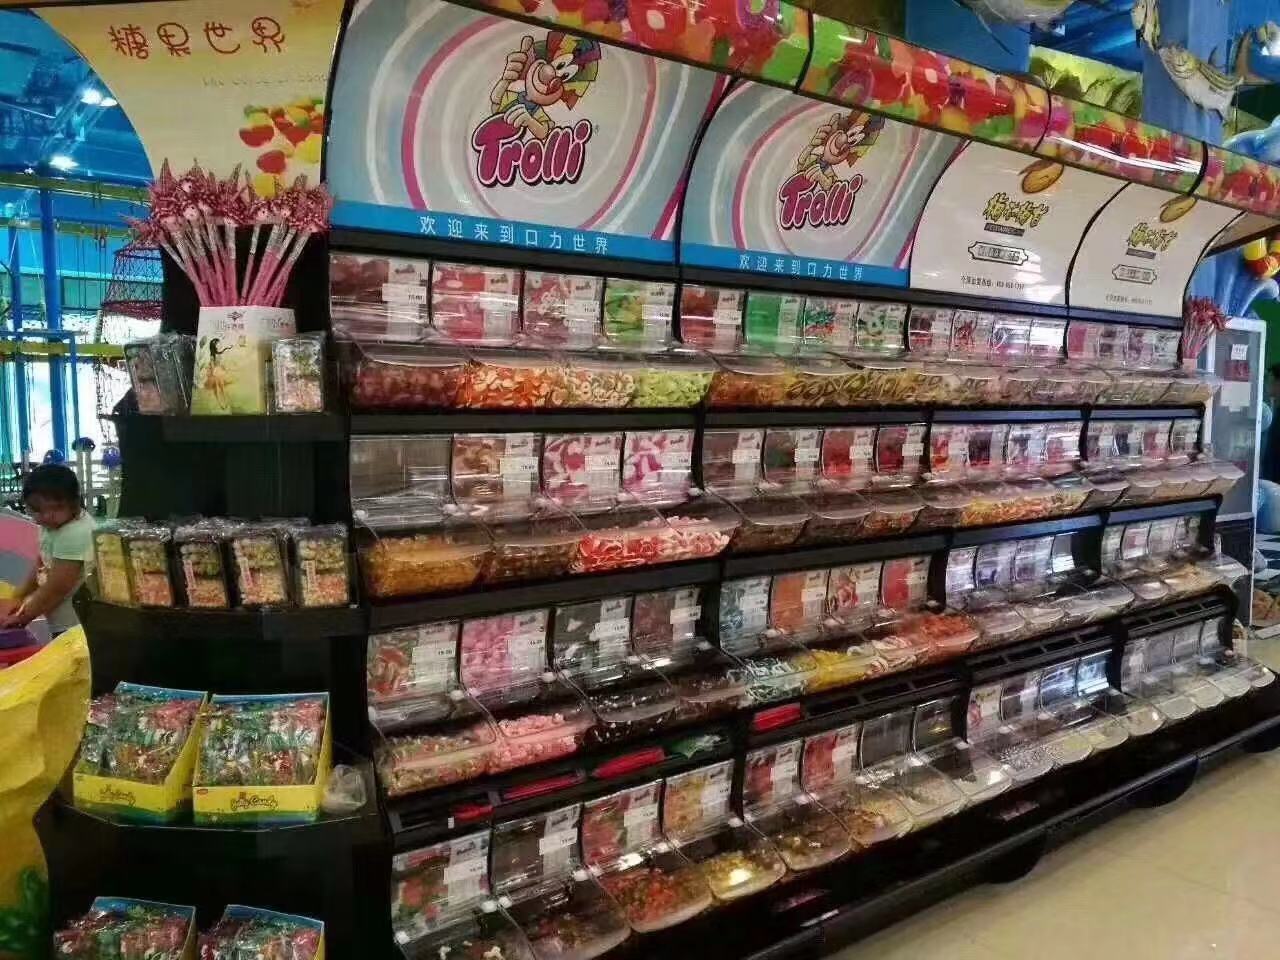 EK-026-10 Supermarket rack Metal Display Gondola Shelf Supermarket Bulk Foods Shelves Candy Store Display Shelving